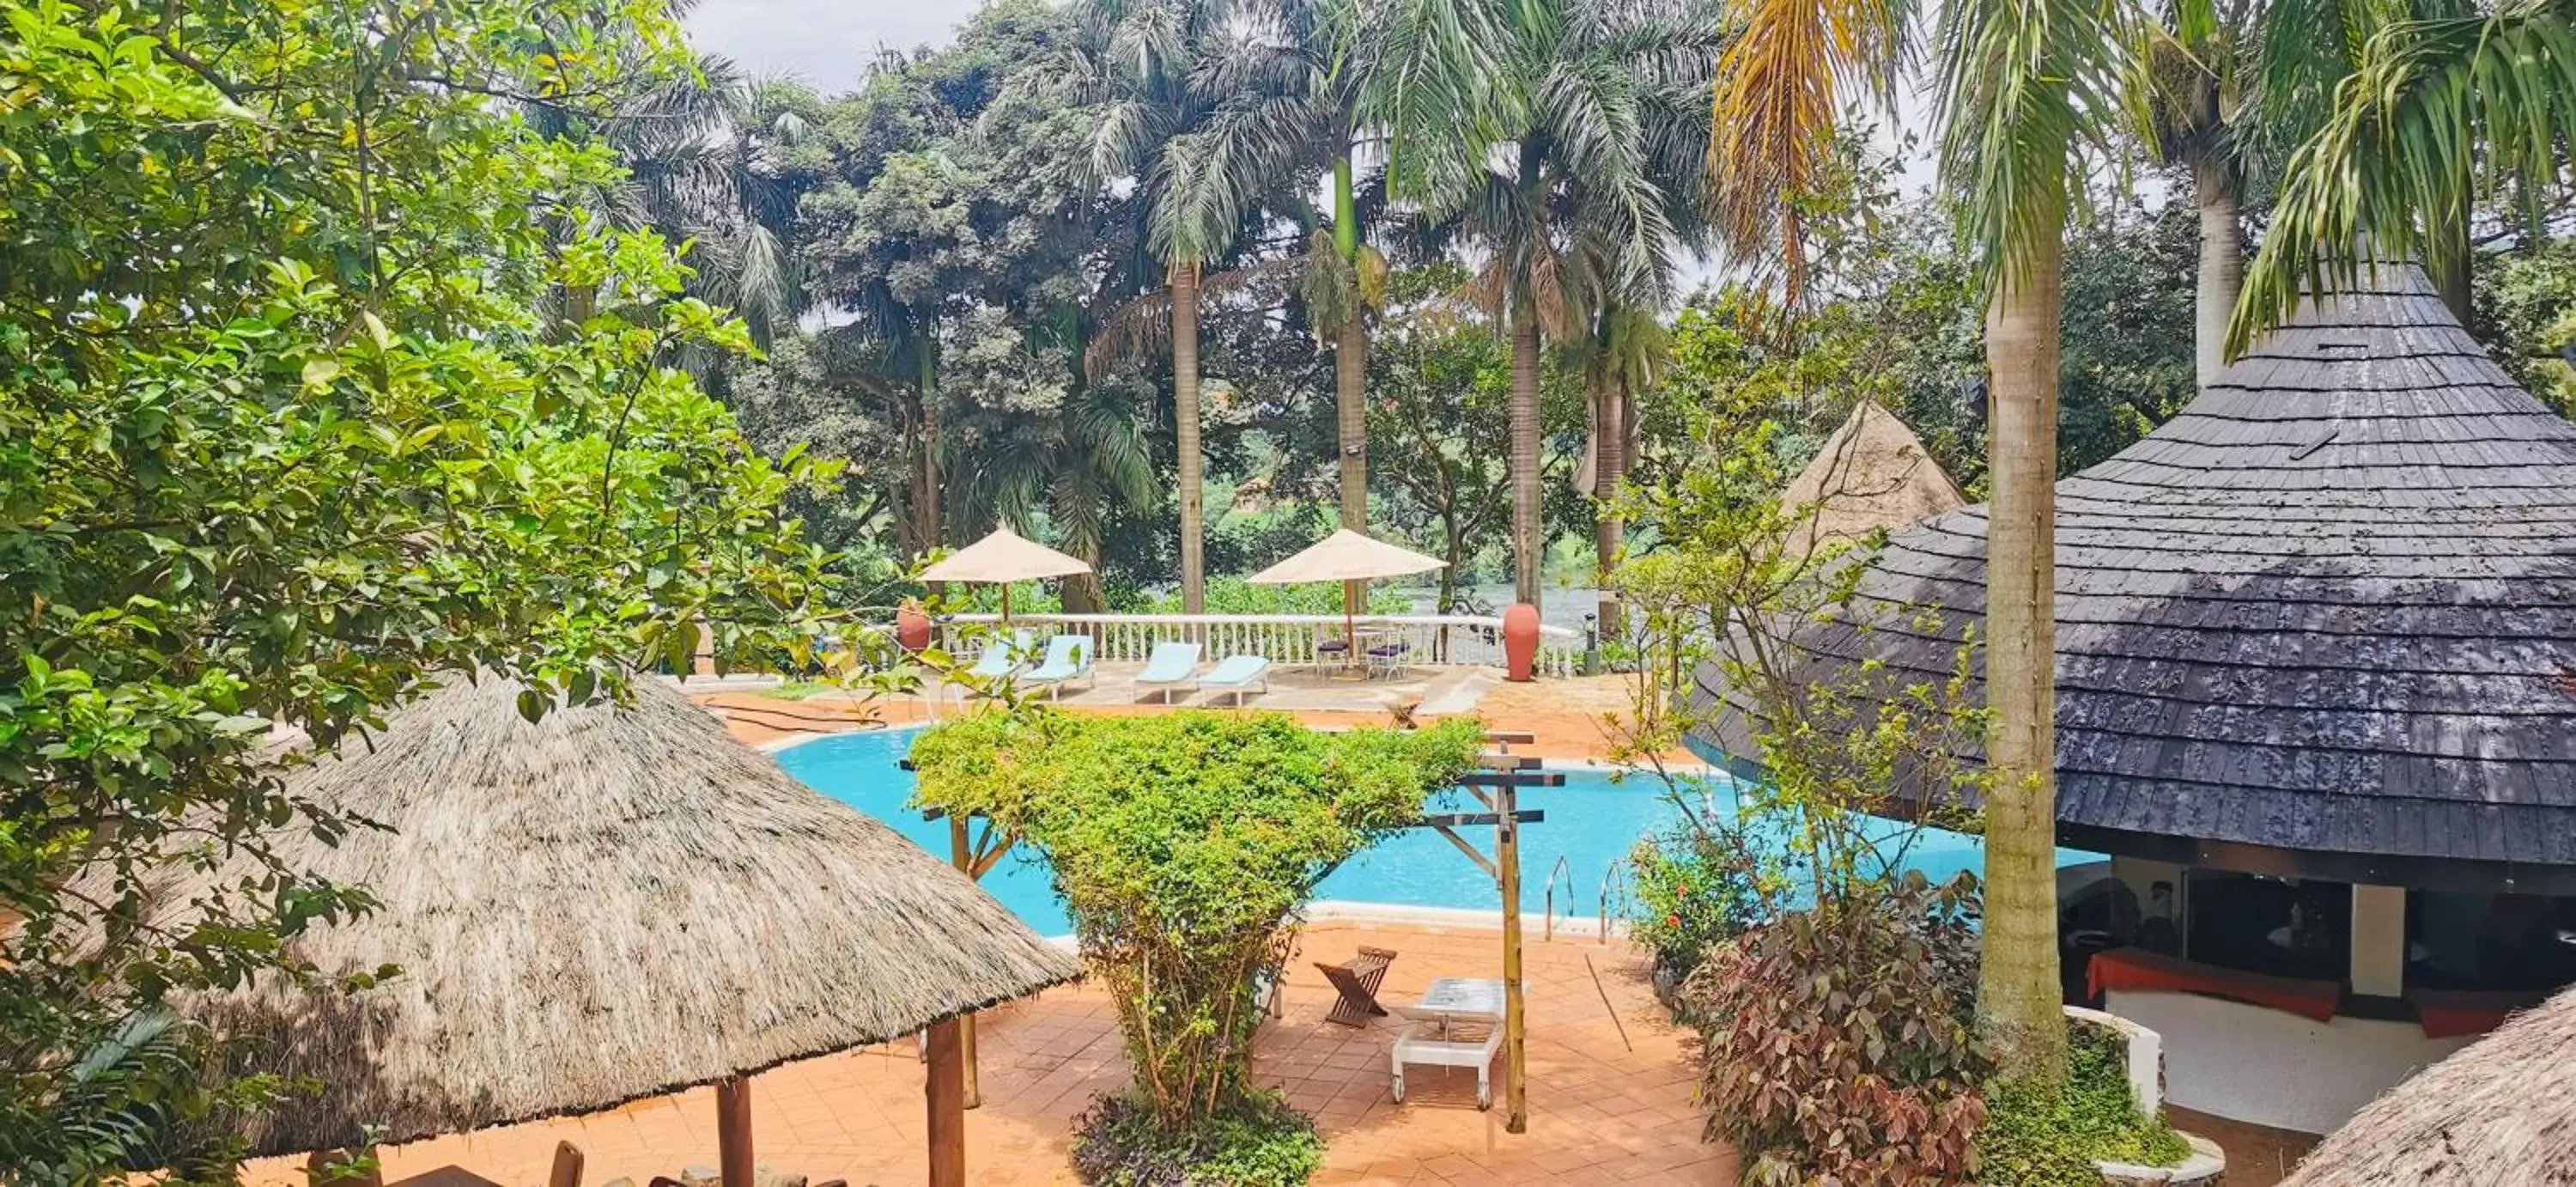 Swimming pool in Jinja Nile Resort